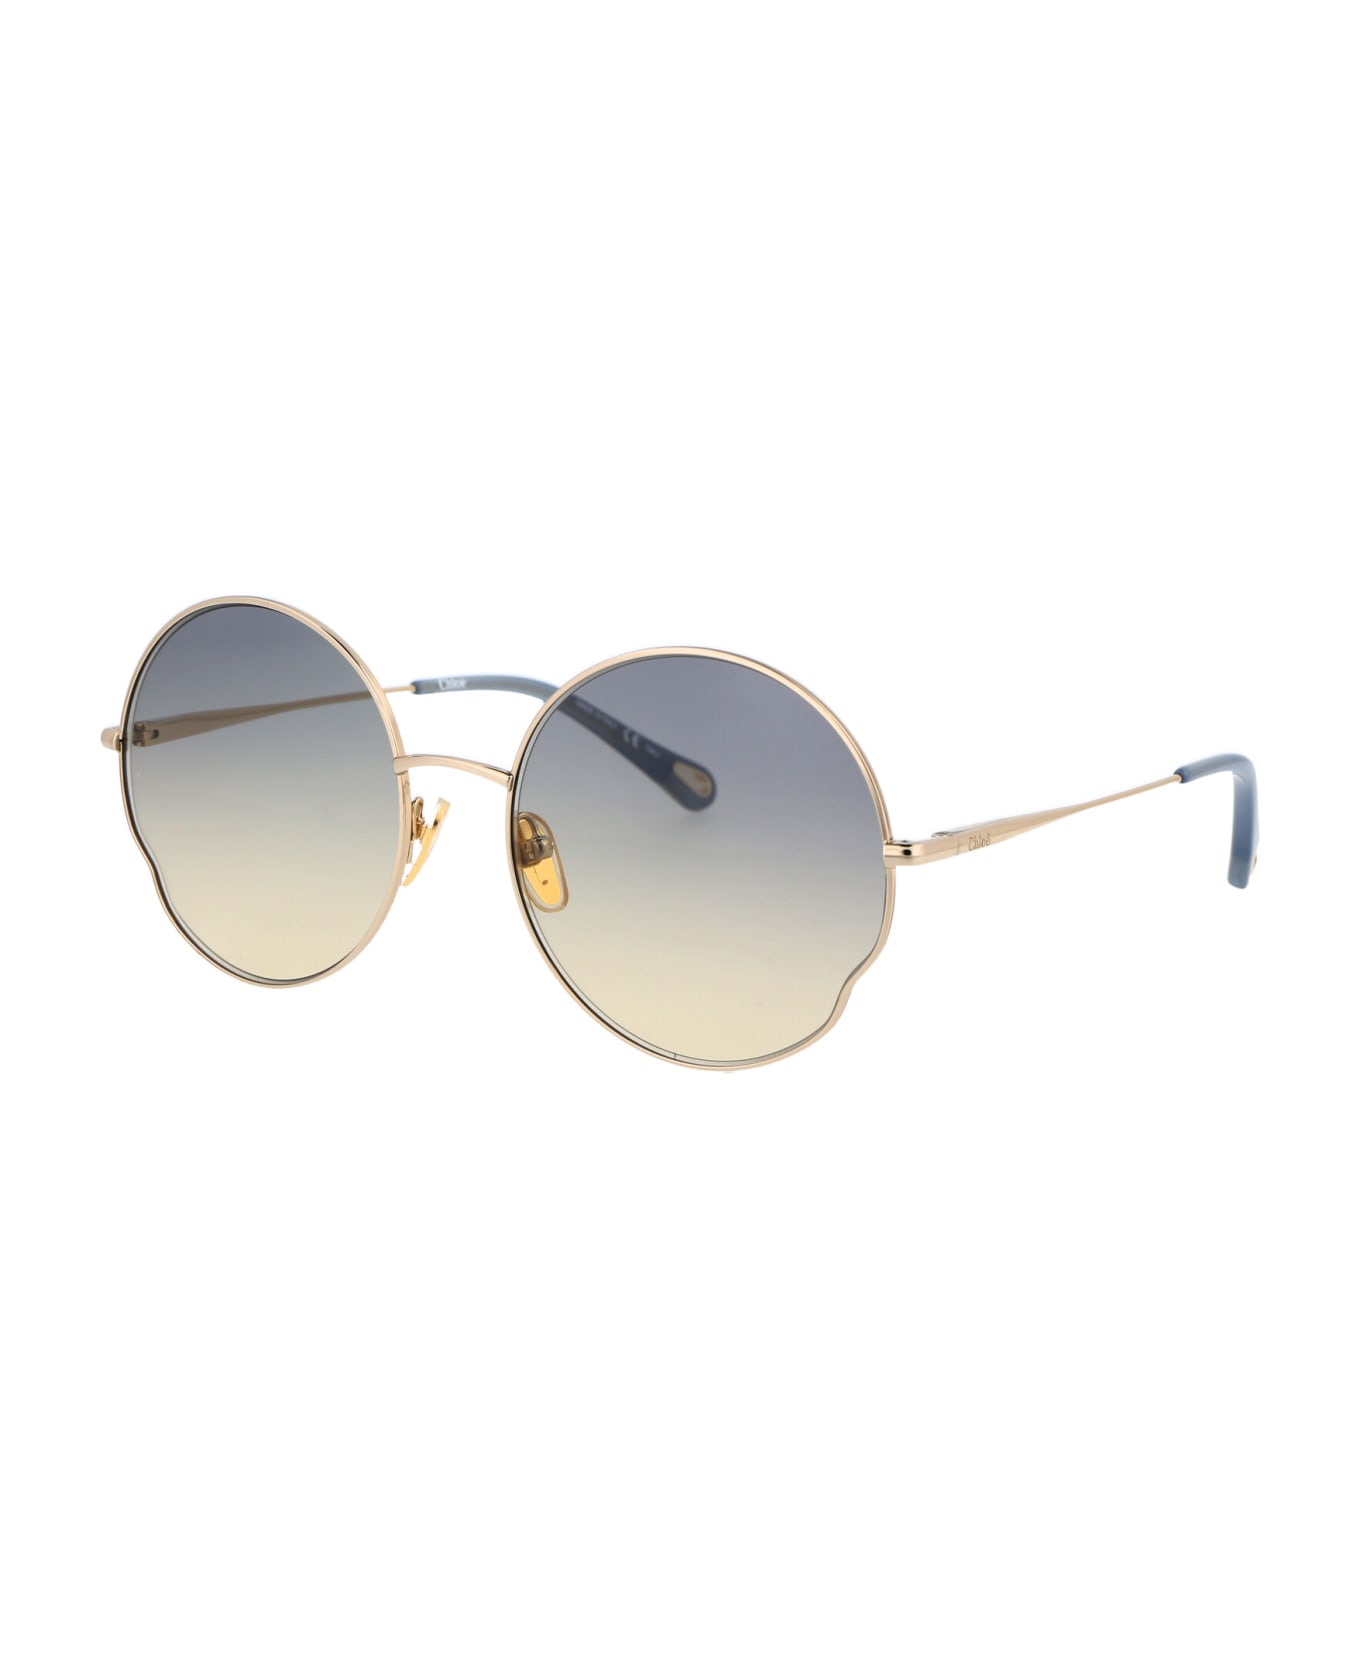 Chloé Eyewear Ch0095s Sunglasses - 002 GOLD GOLD GREY